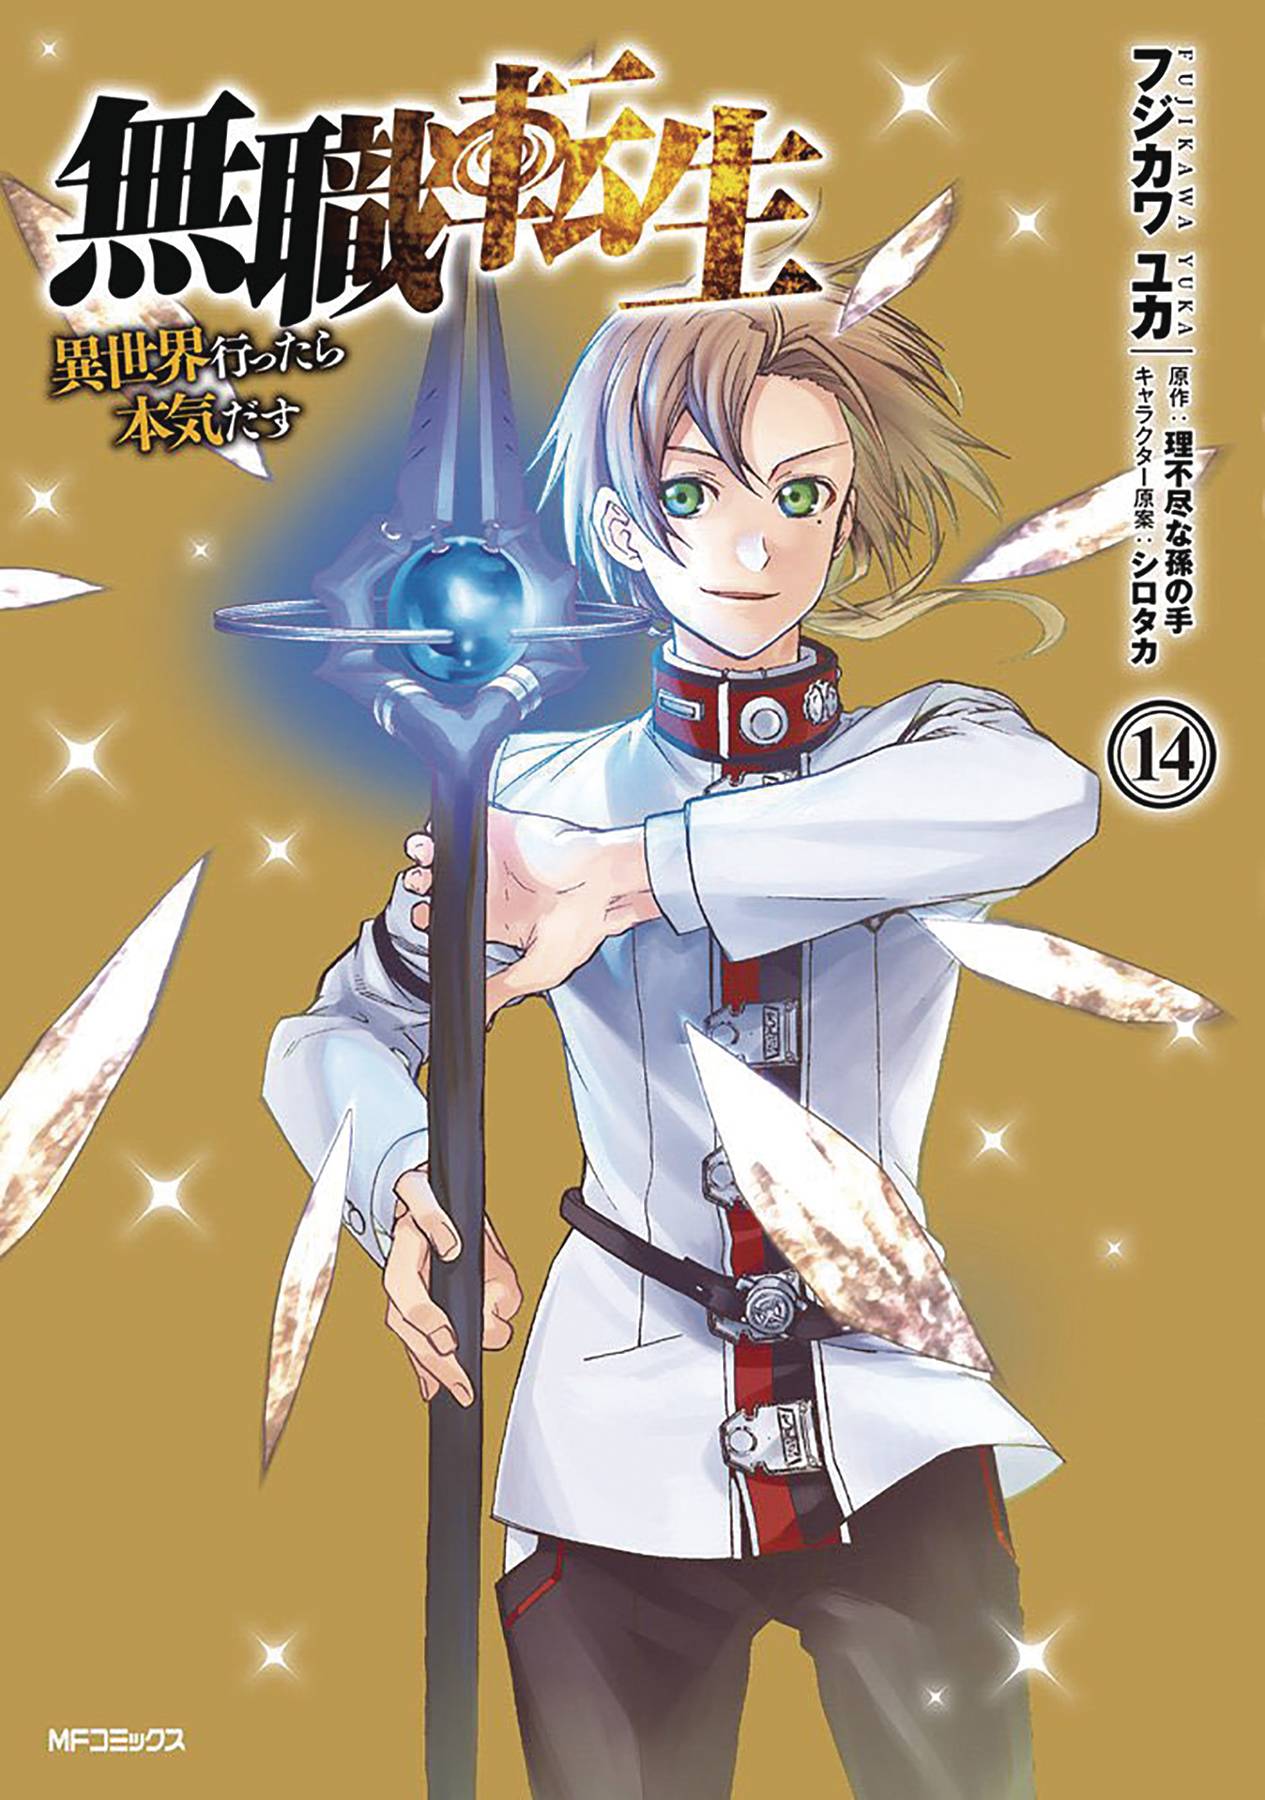 Mushoku Tensei Jobless Reincarnation Manga Volume 14